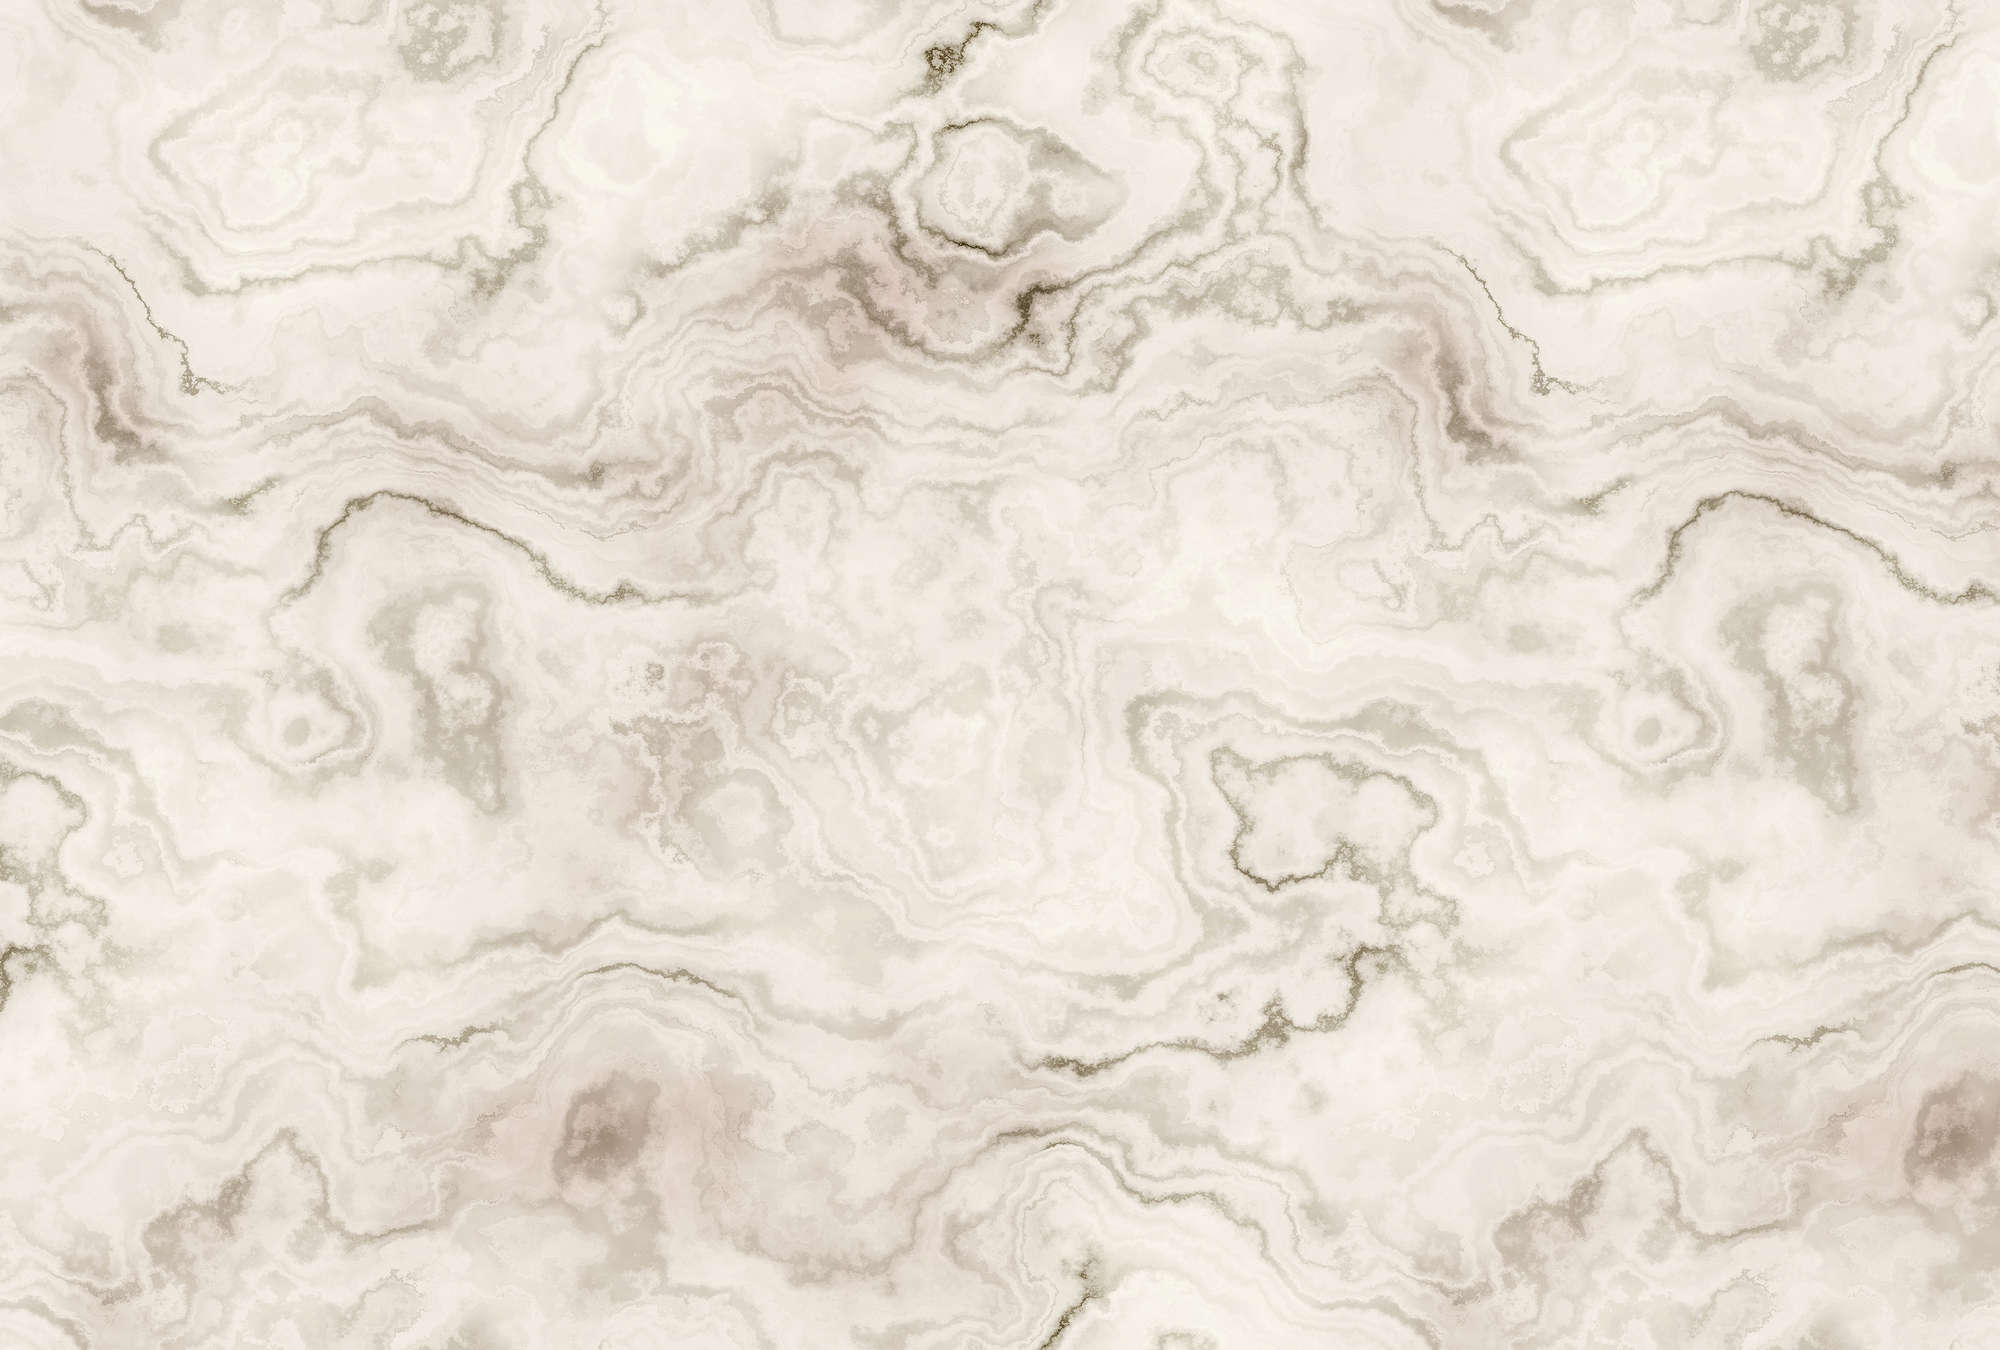             Carrara 2 - Elegante carta da parati effetto marmo - Beige, Marrone | Vello liscio opaco
        